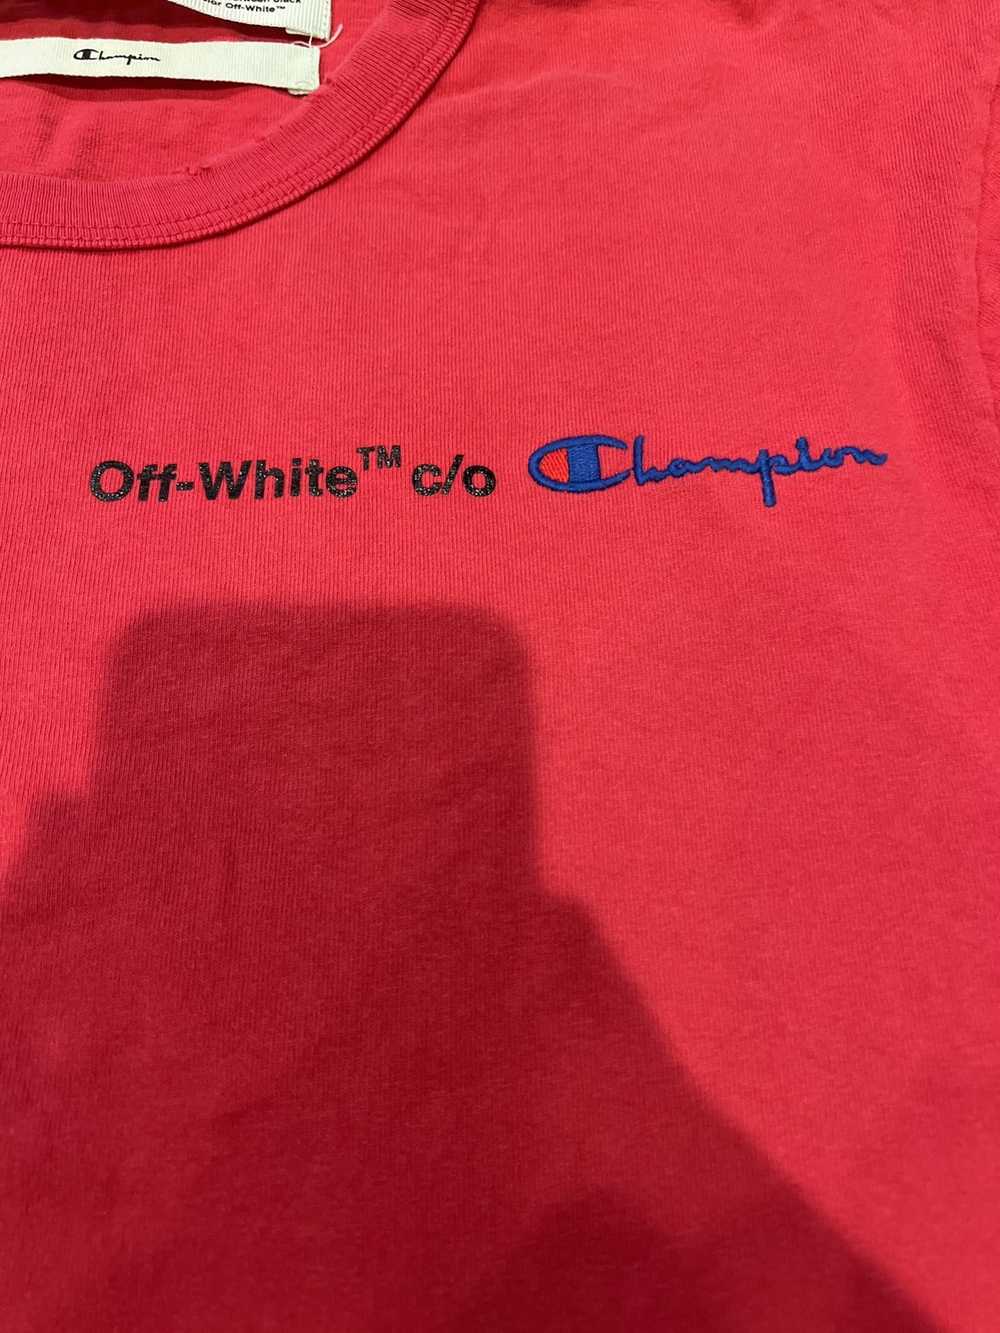 Off-White Off White Champion T-Shirt XS - image 4